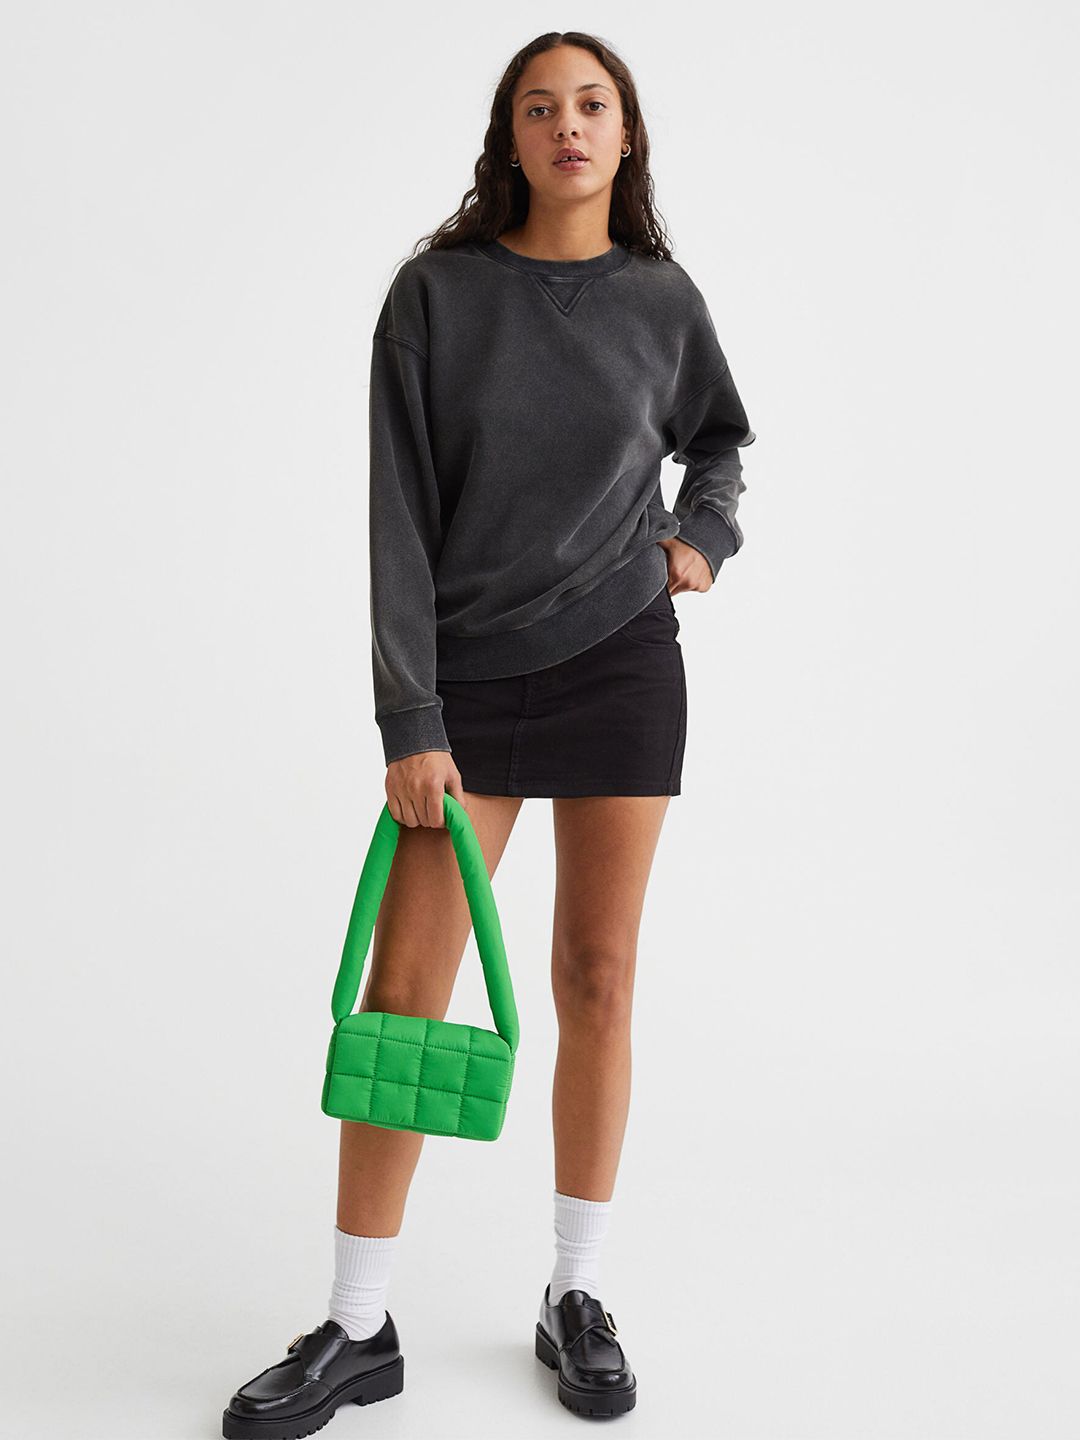 H&M Women Black Solid Sweatshirt Price in India